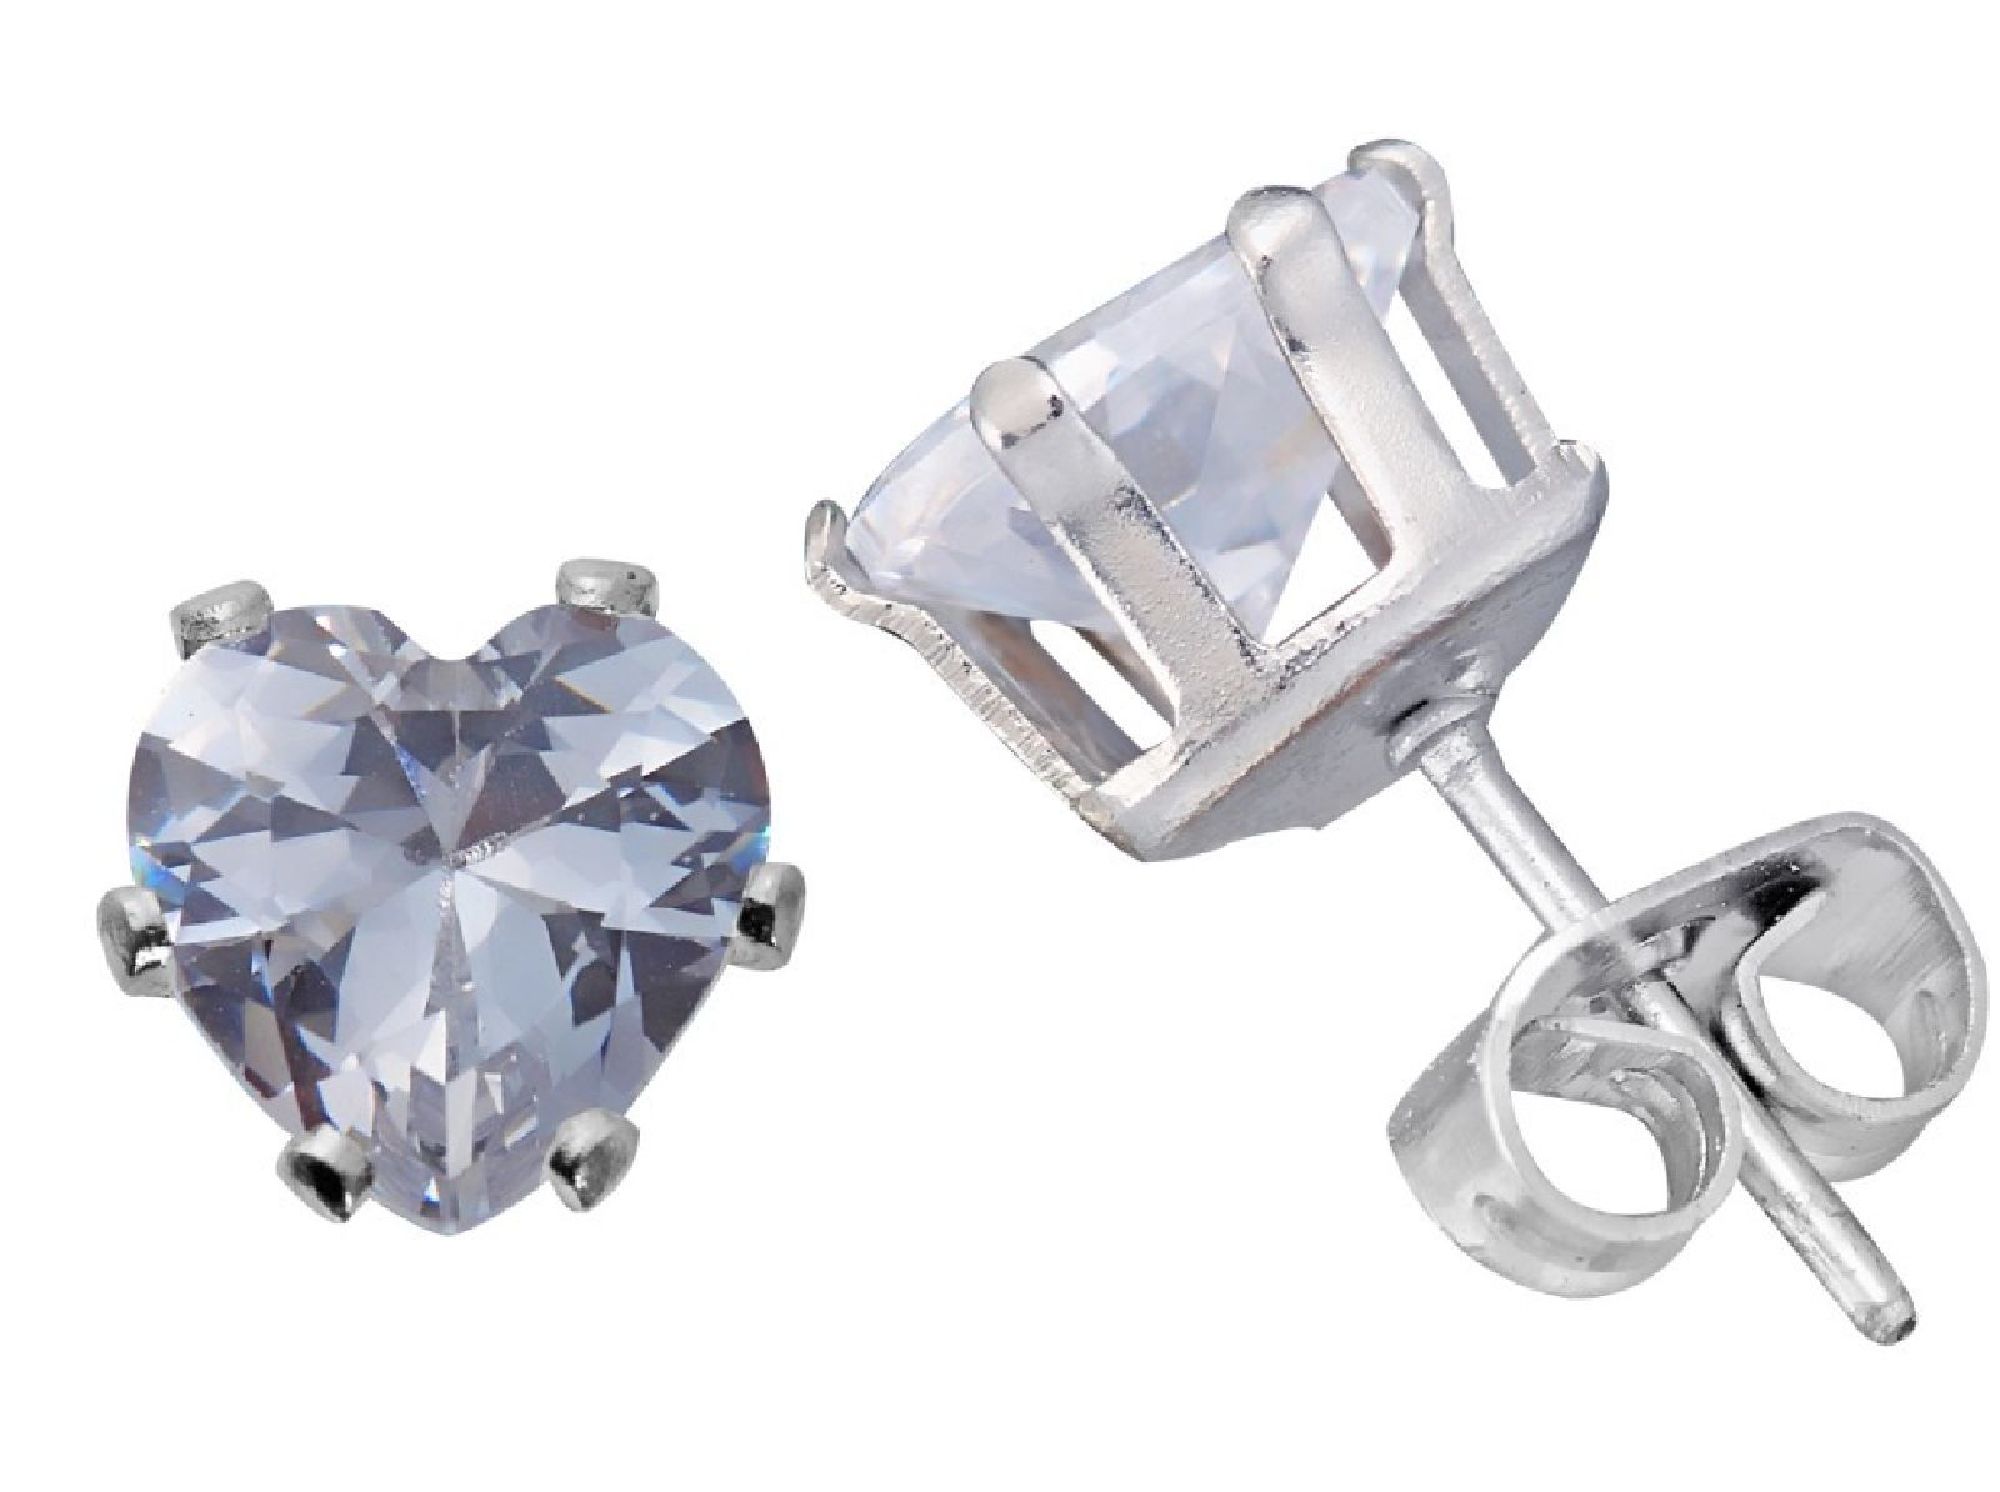 2 Carat Heart Shape White Diamond manmade Stud Earrings for Woman in Sterling Silver Designed in France